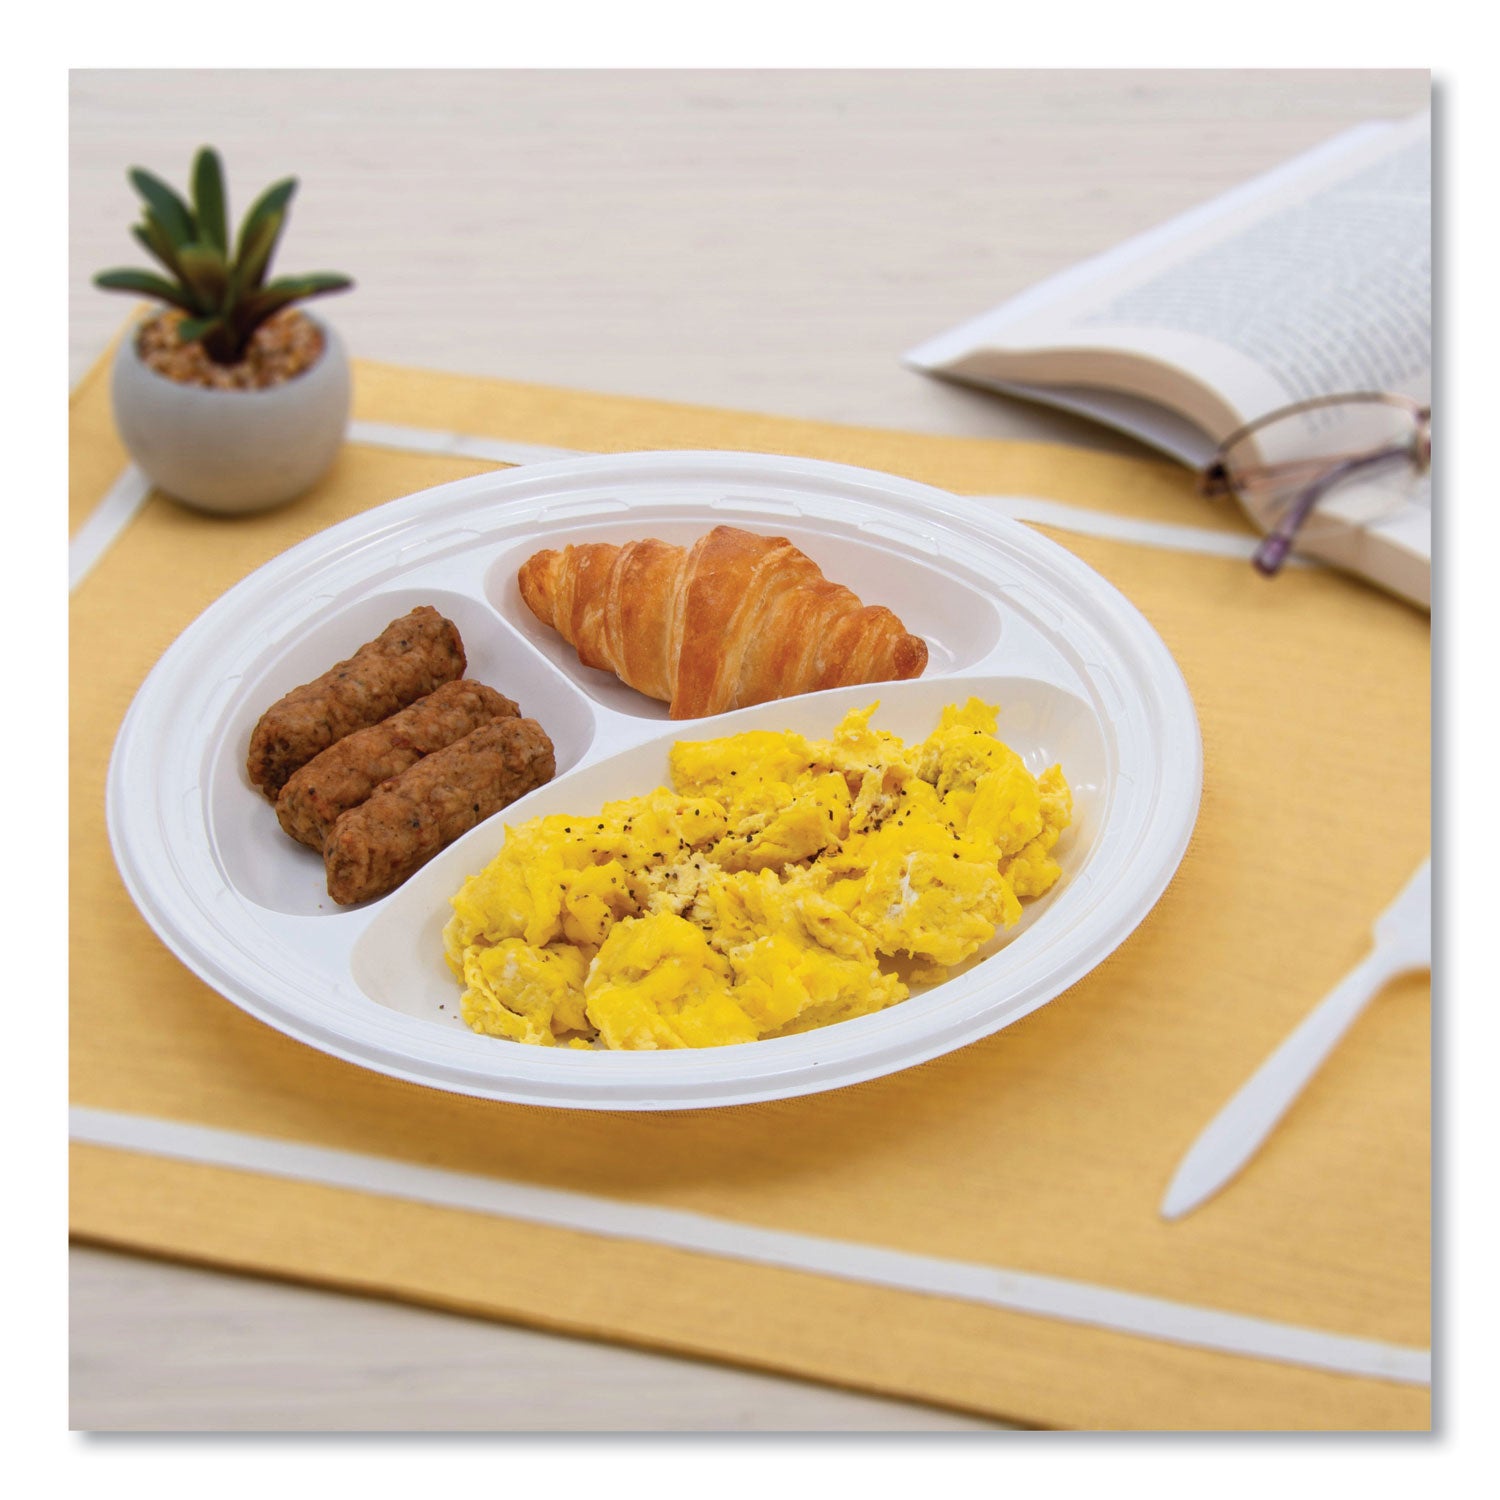 Famous Service Plastic Dinnerware, Plate, 3-Compartment, 10.25" dia, White, 125/Pack, 4 Packs/Carton - 